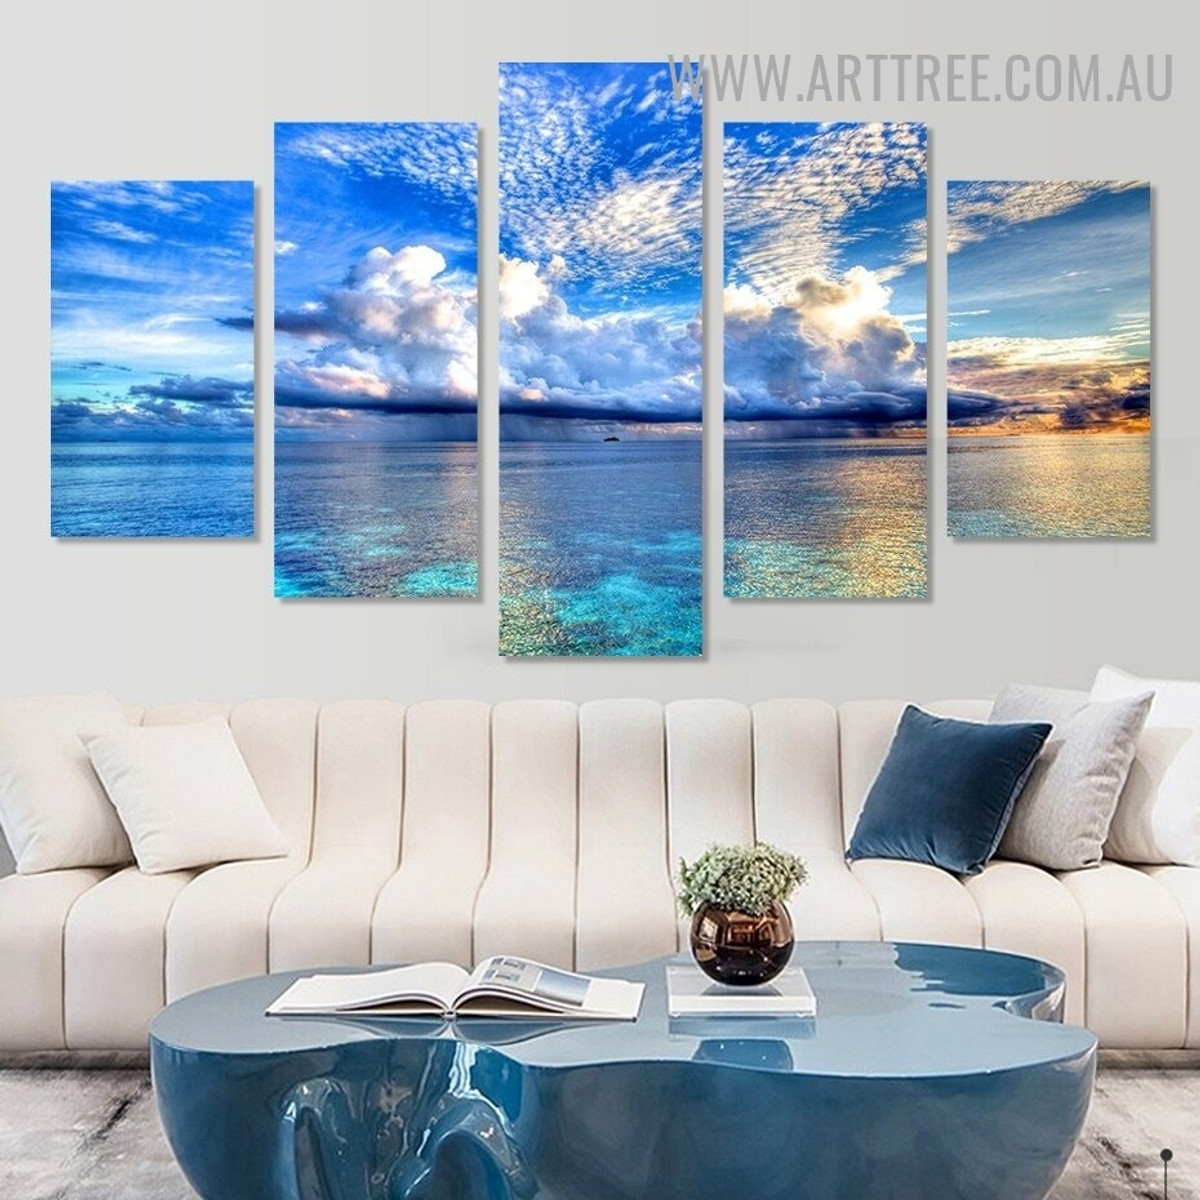 Ocean Welkin Modern 5 Piece Multi Panel Seascape Image Canvas Artwork Print for Room Wall Flourish